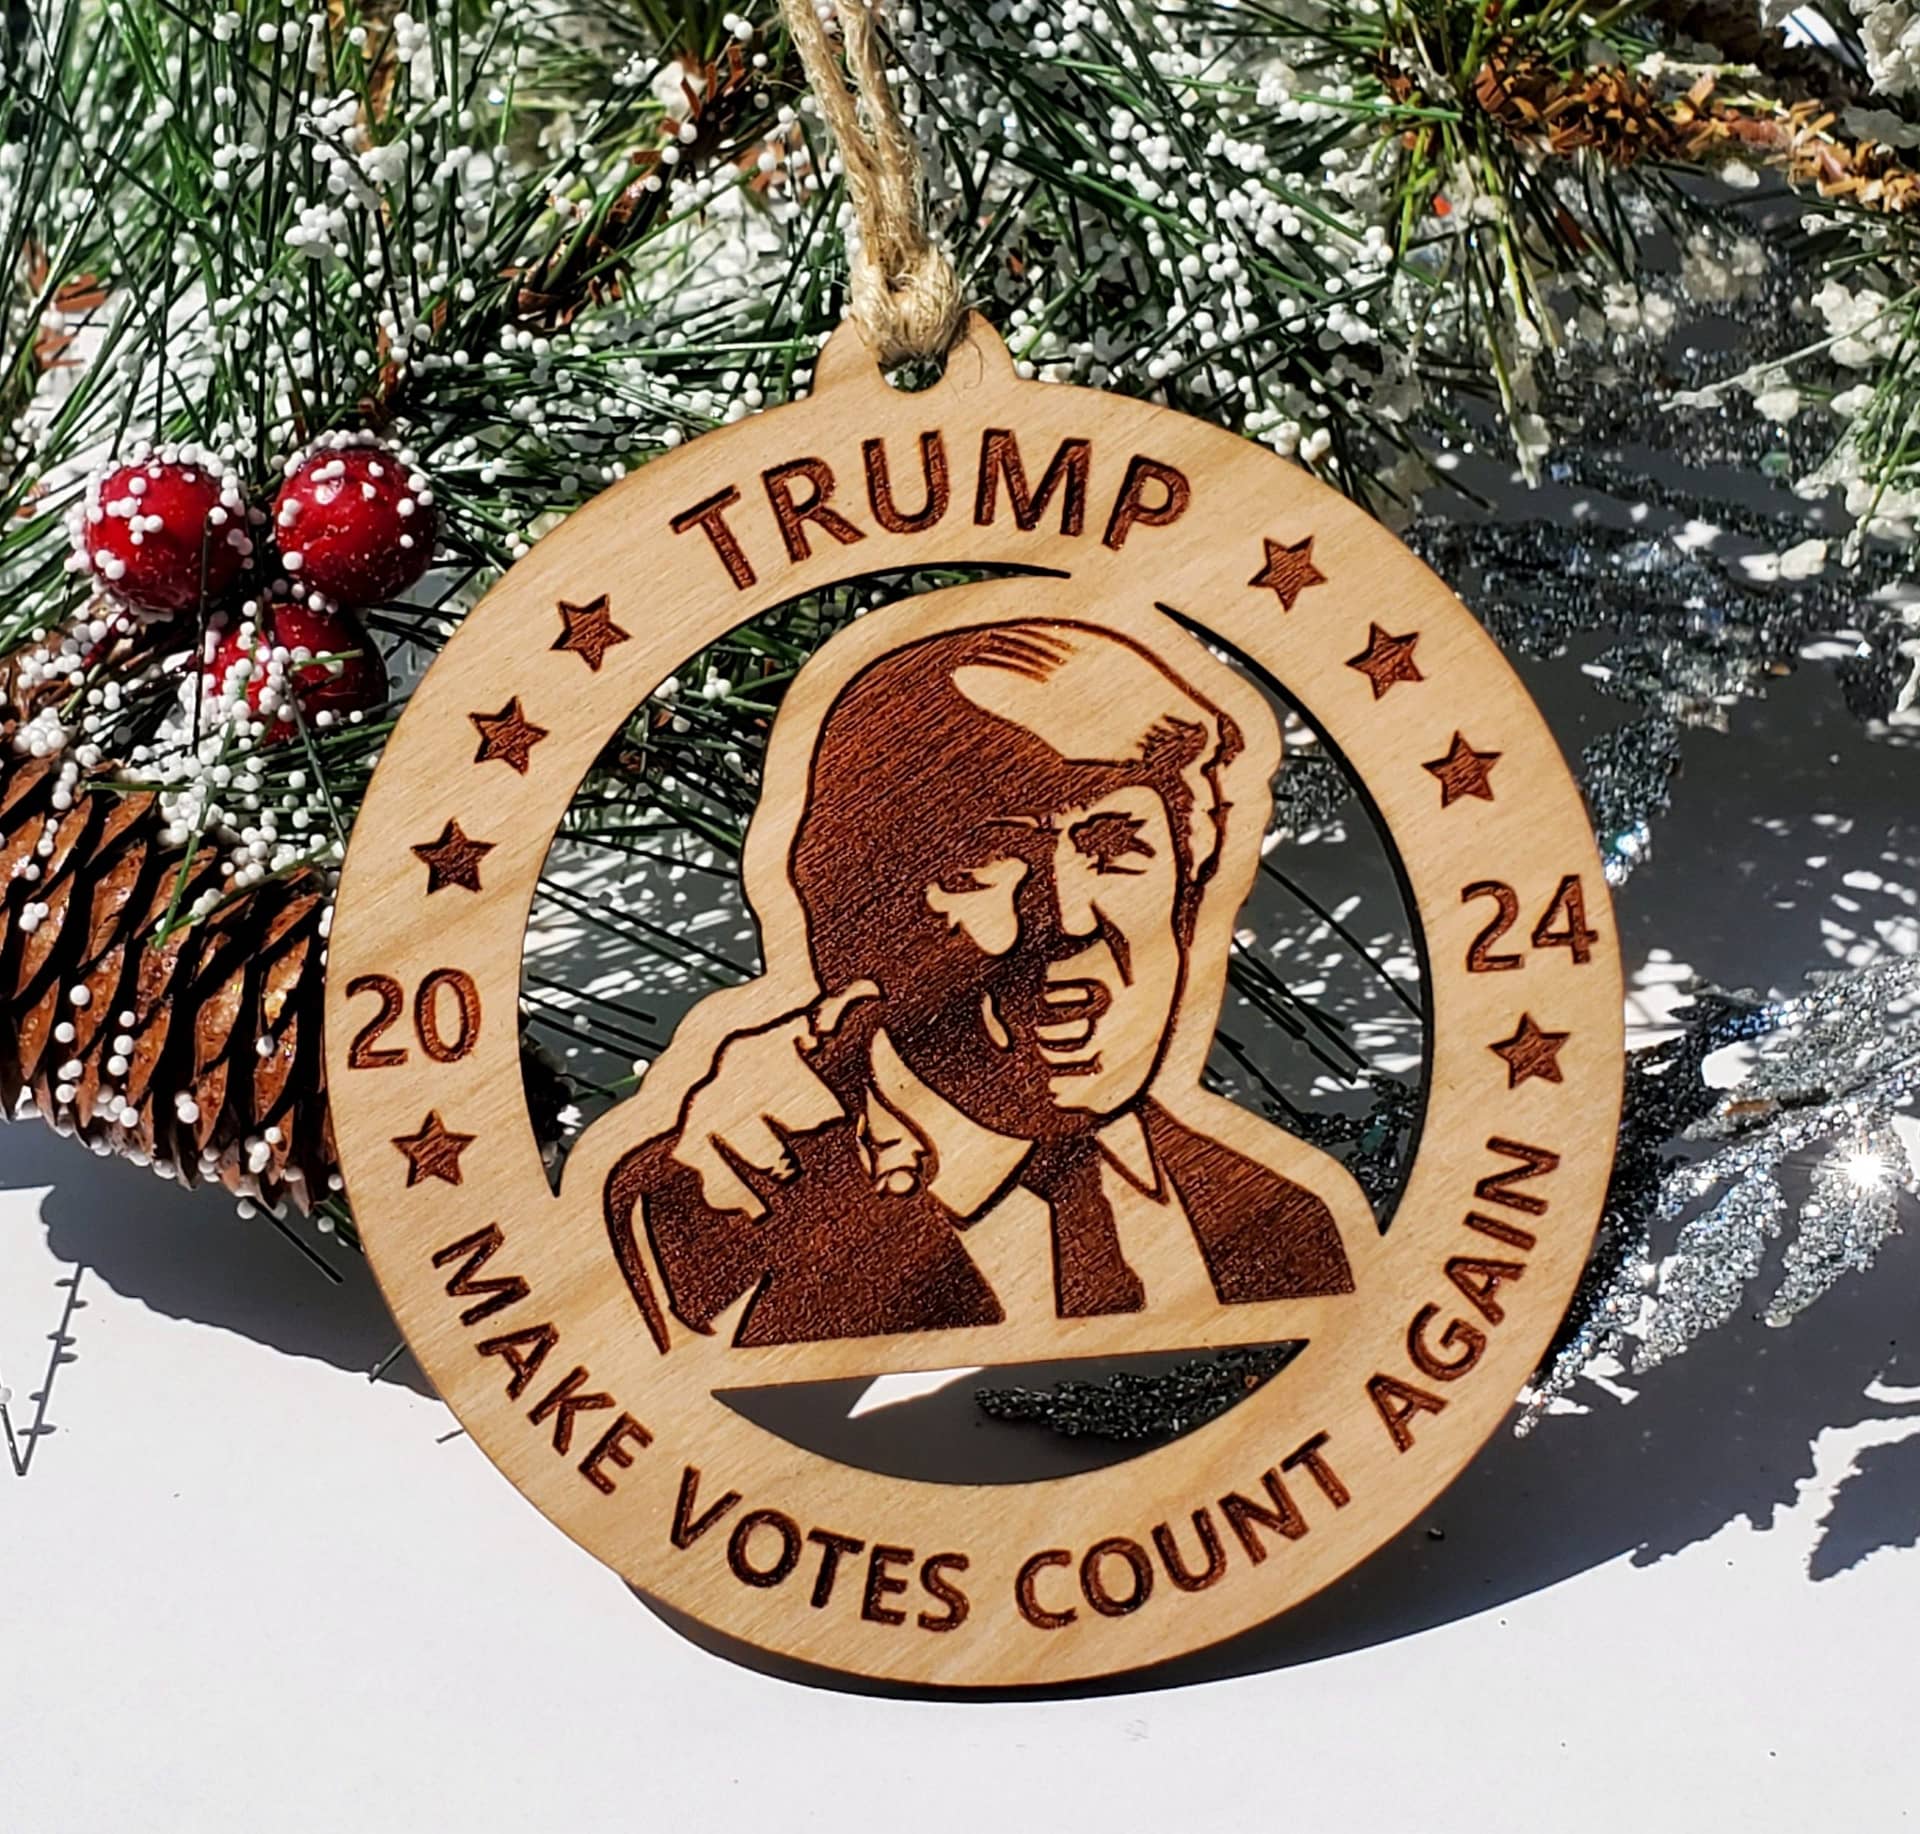 Trump 2024 Make America Great Again Wine Christmas Ornament - Trends Bedding